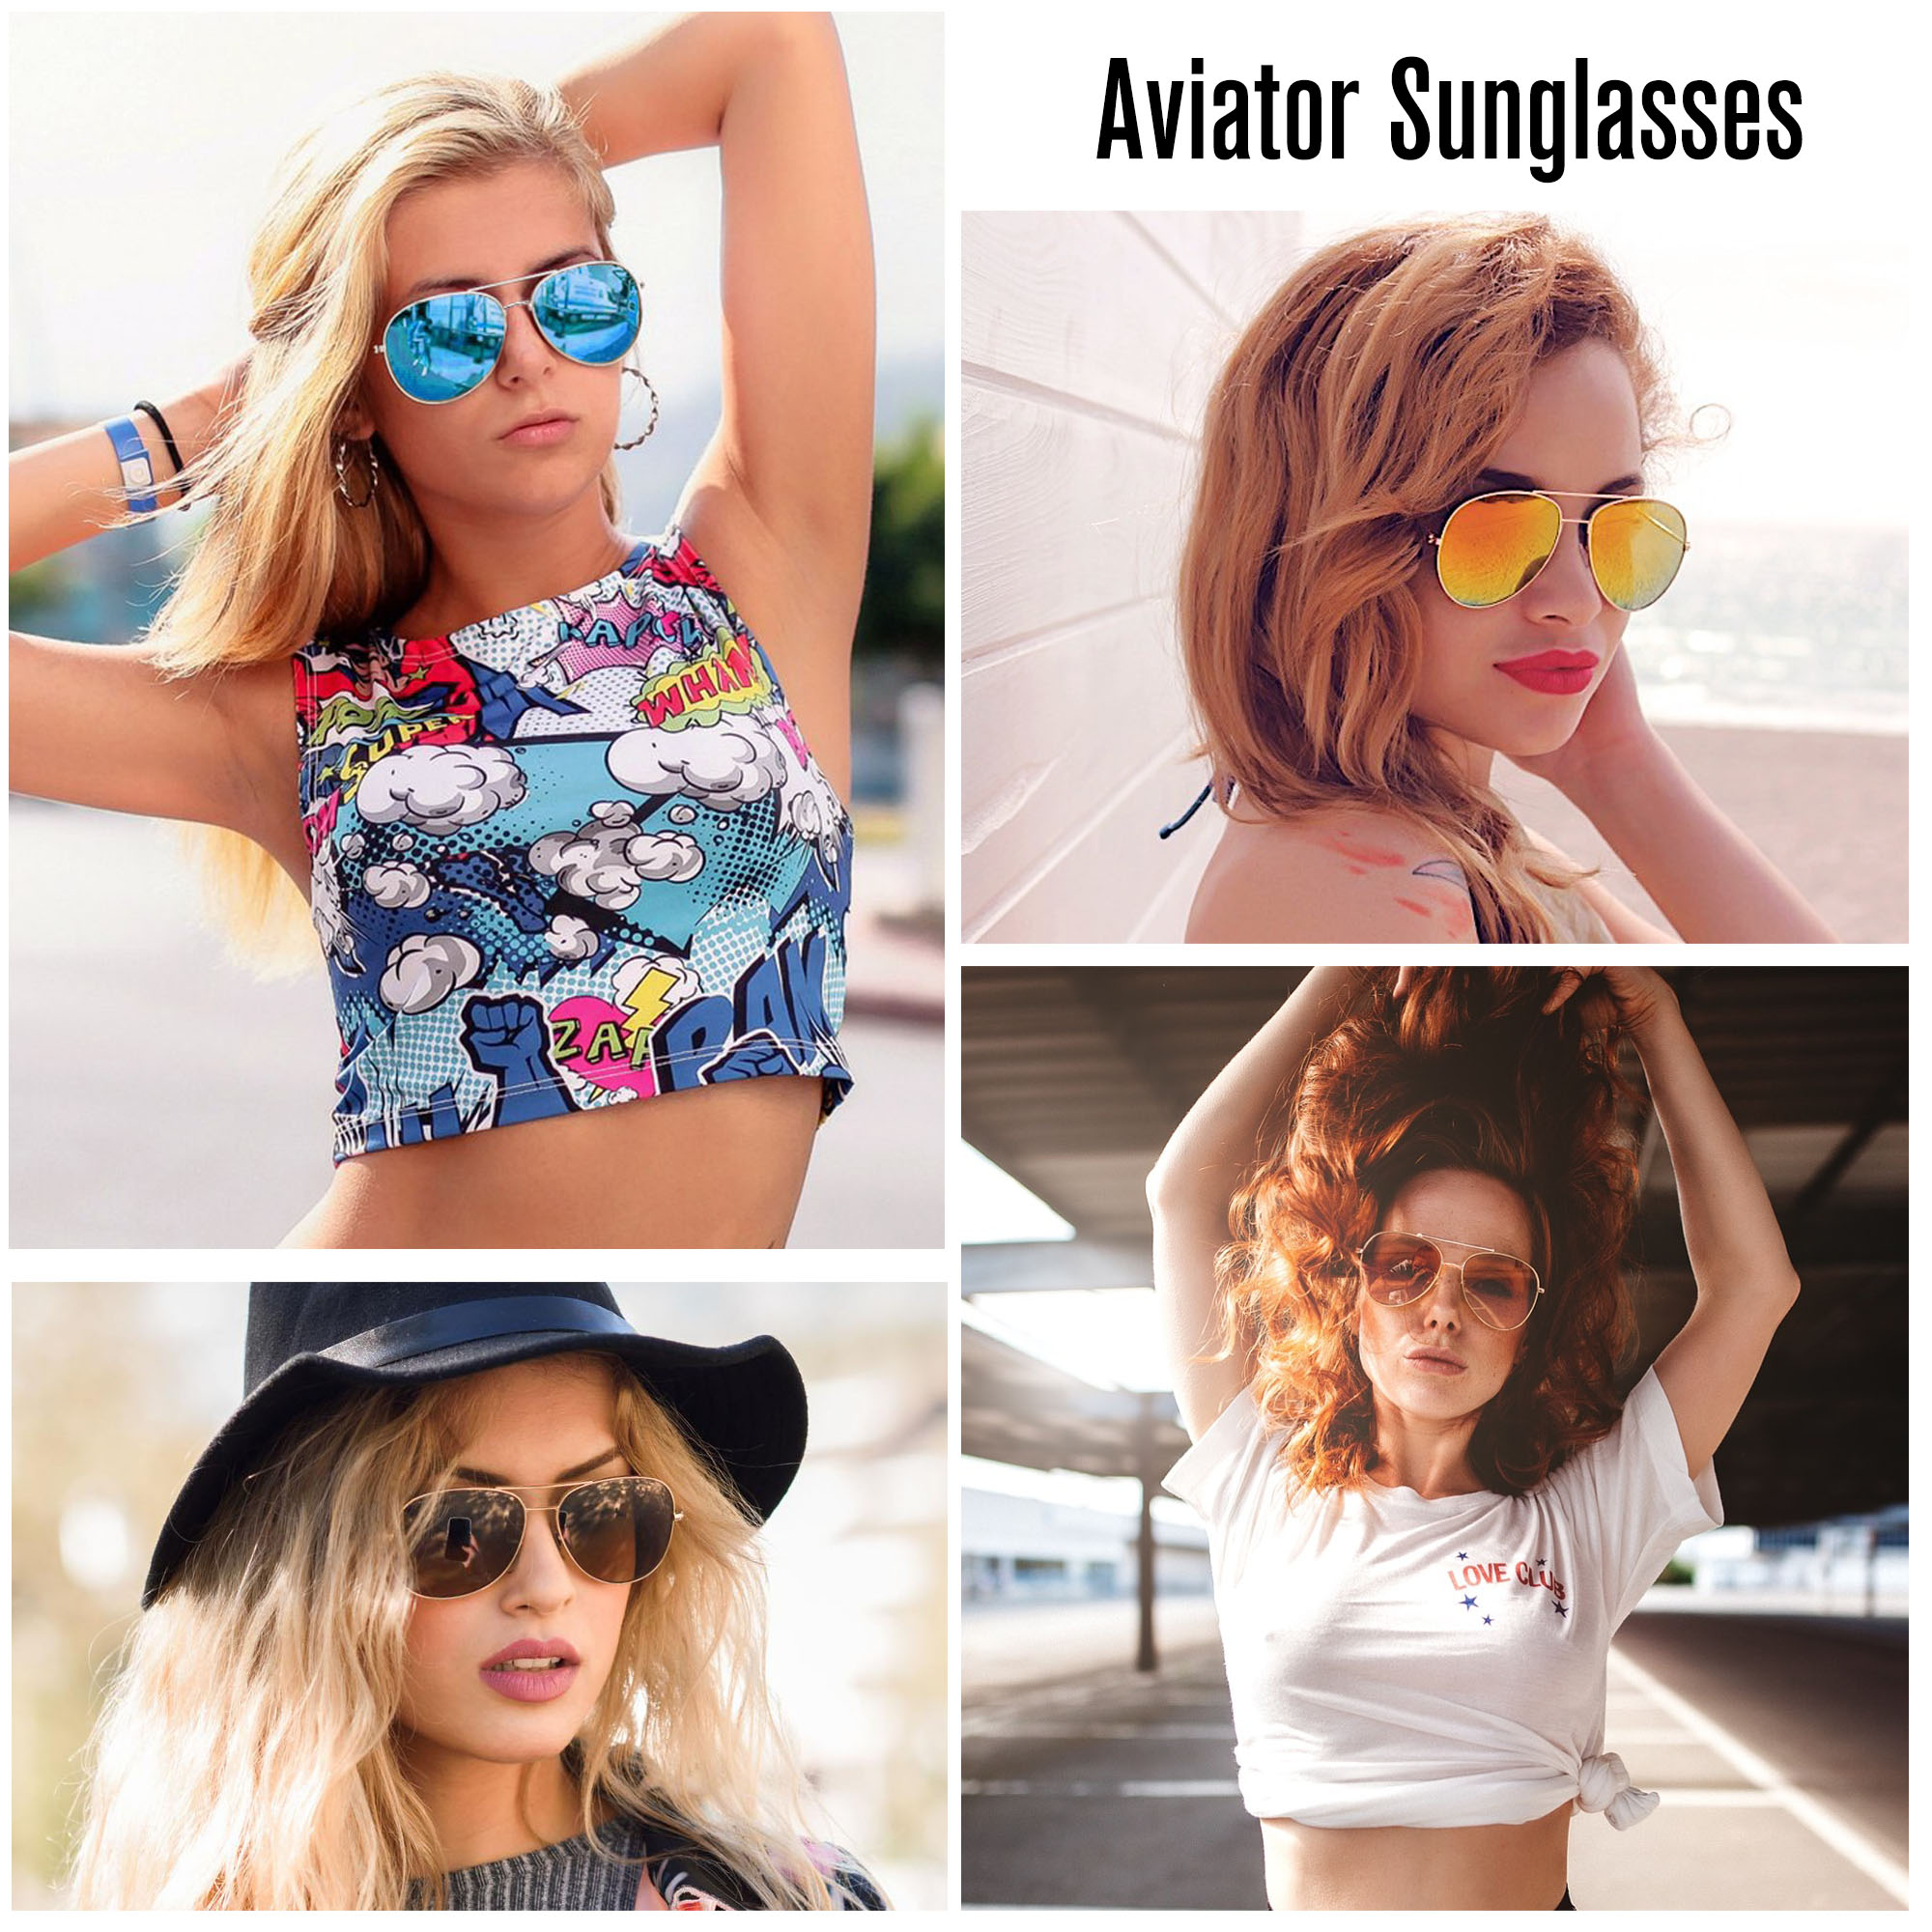 LotFancy Women's Aviator Sunglasses, Ultra Lightweight,UV400 Protection,Light Gray - image 2 of 7